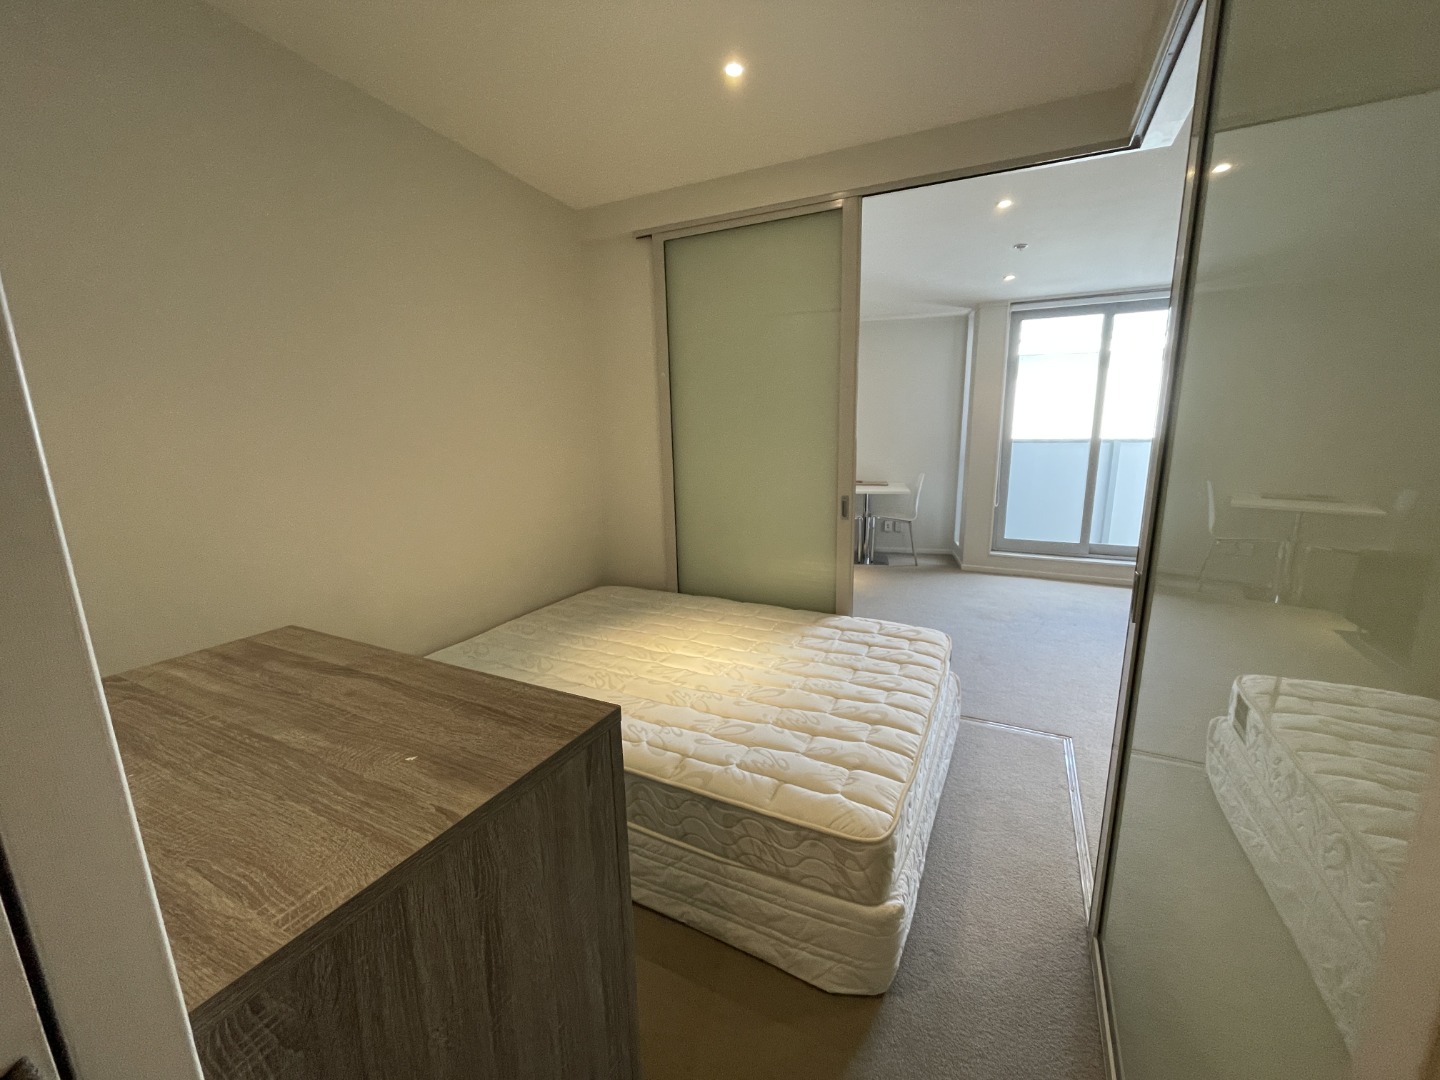 Lovely 1 bedroom apartment - Furnished, Wellington image 6